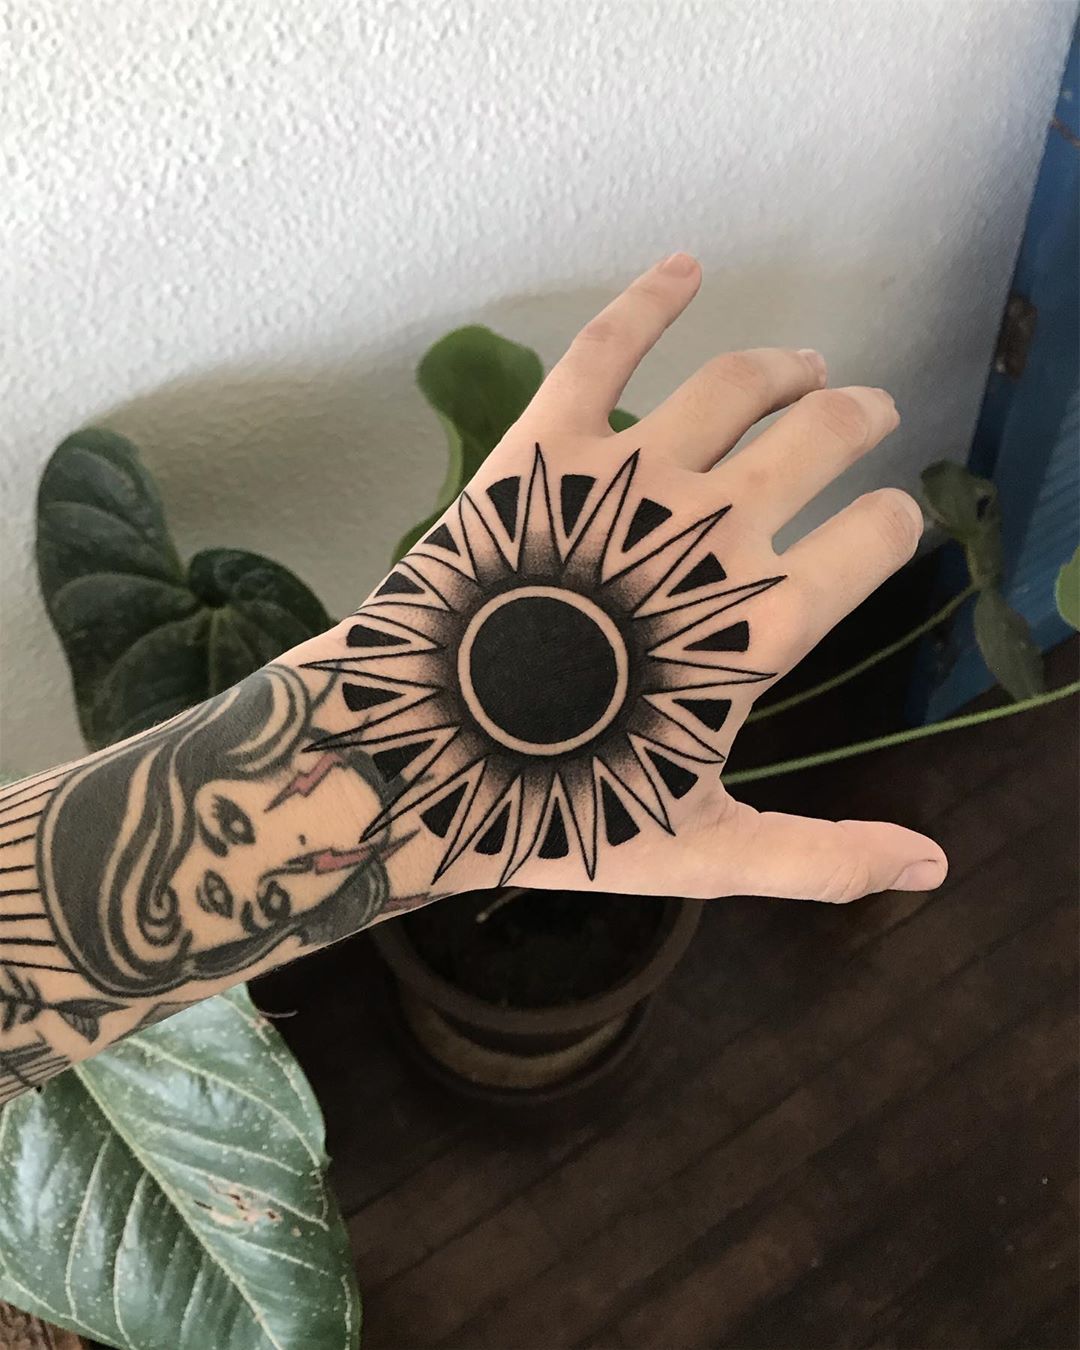 Beware of secret symbolism of sun tattoo